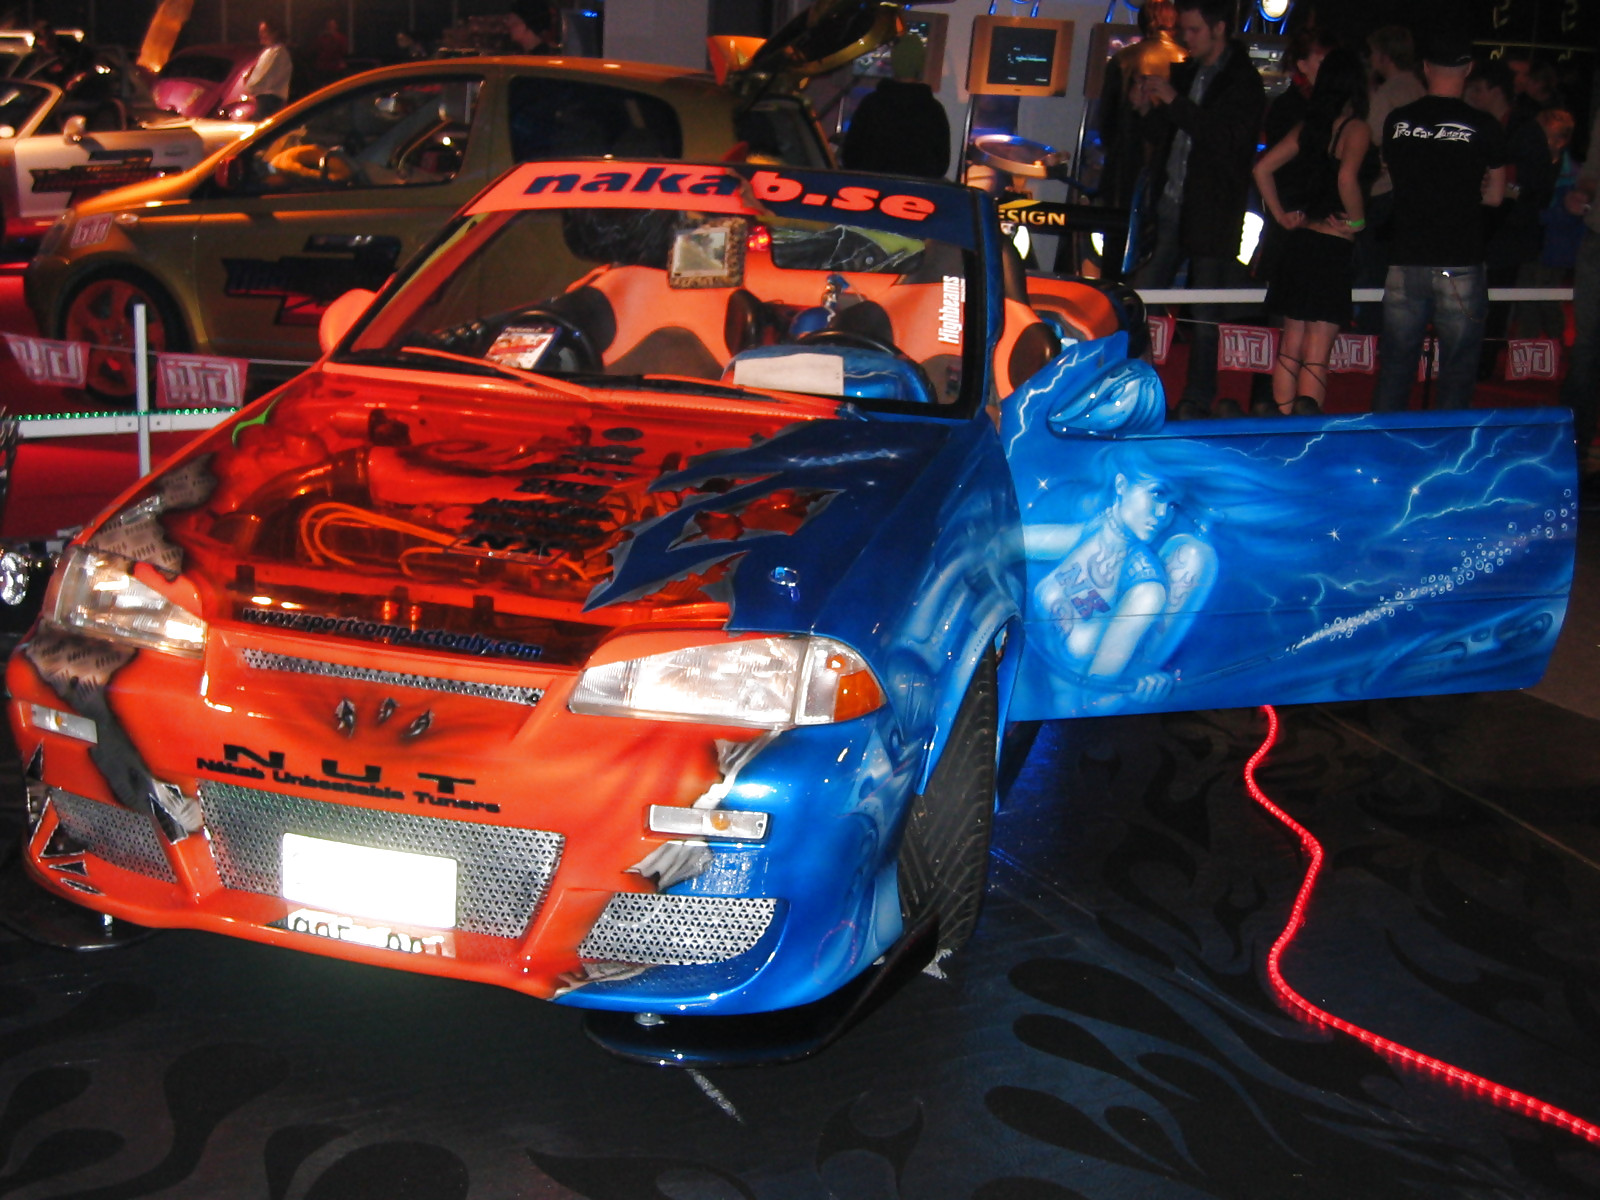 X-treme car show 2004